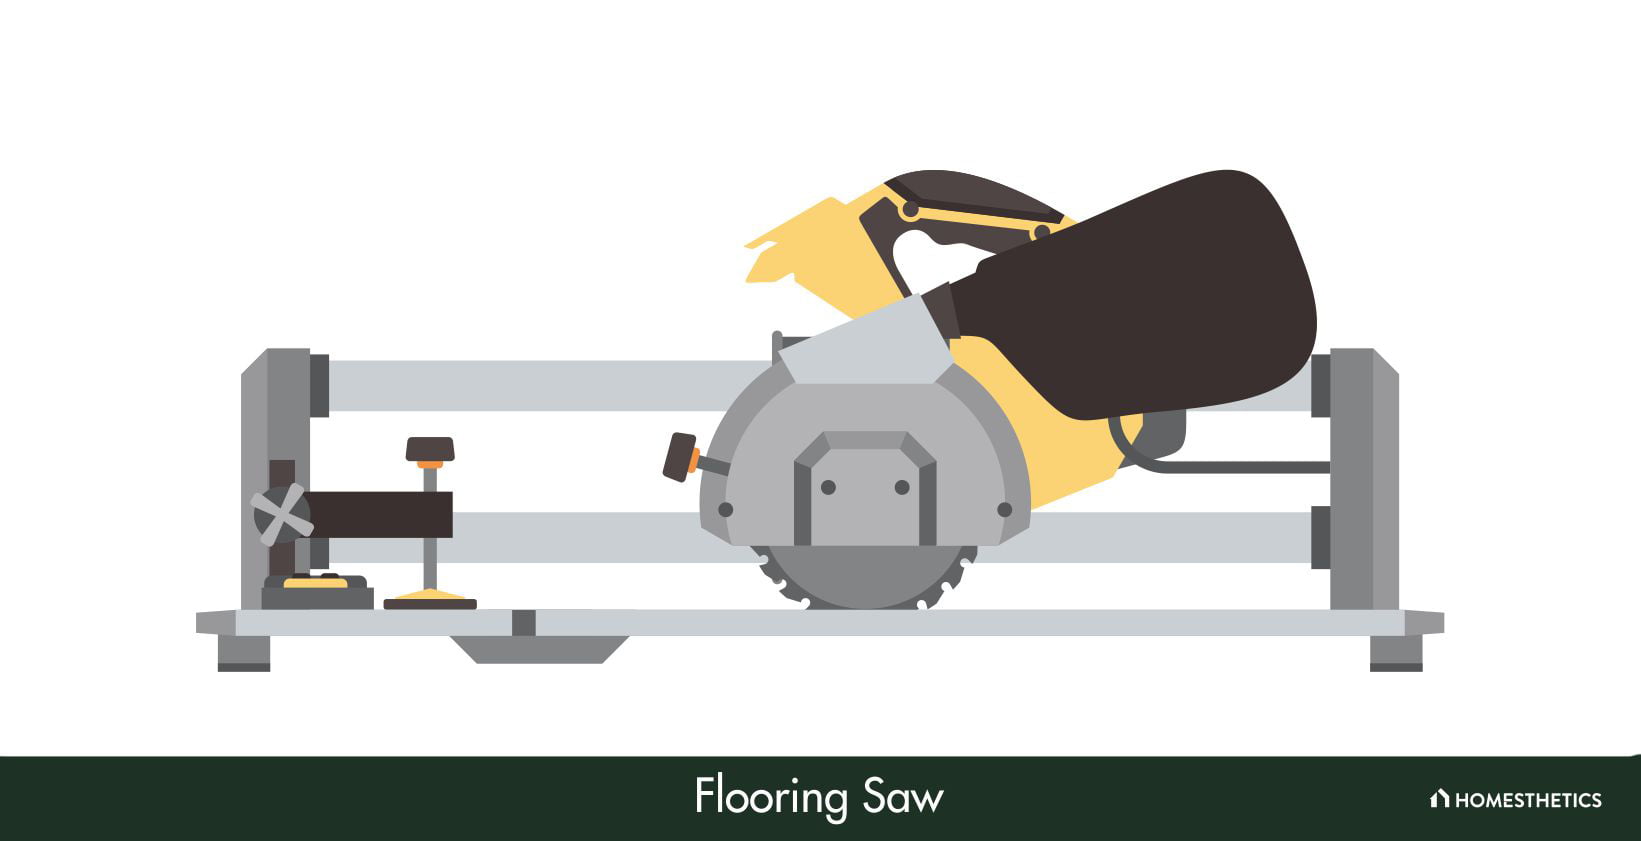 Flooring Saw